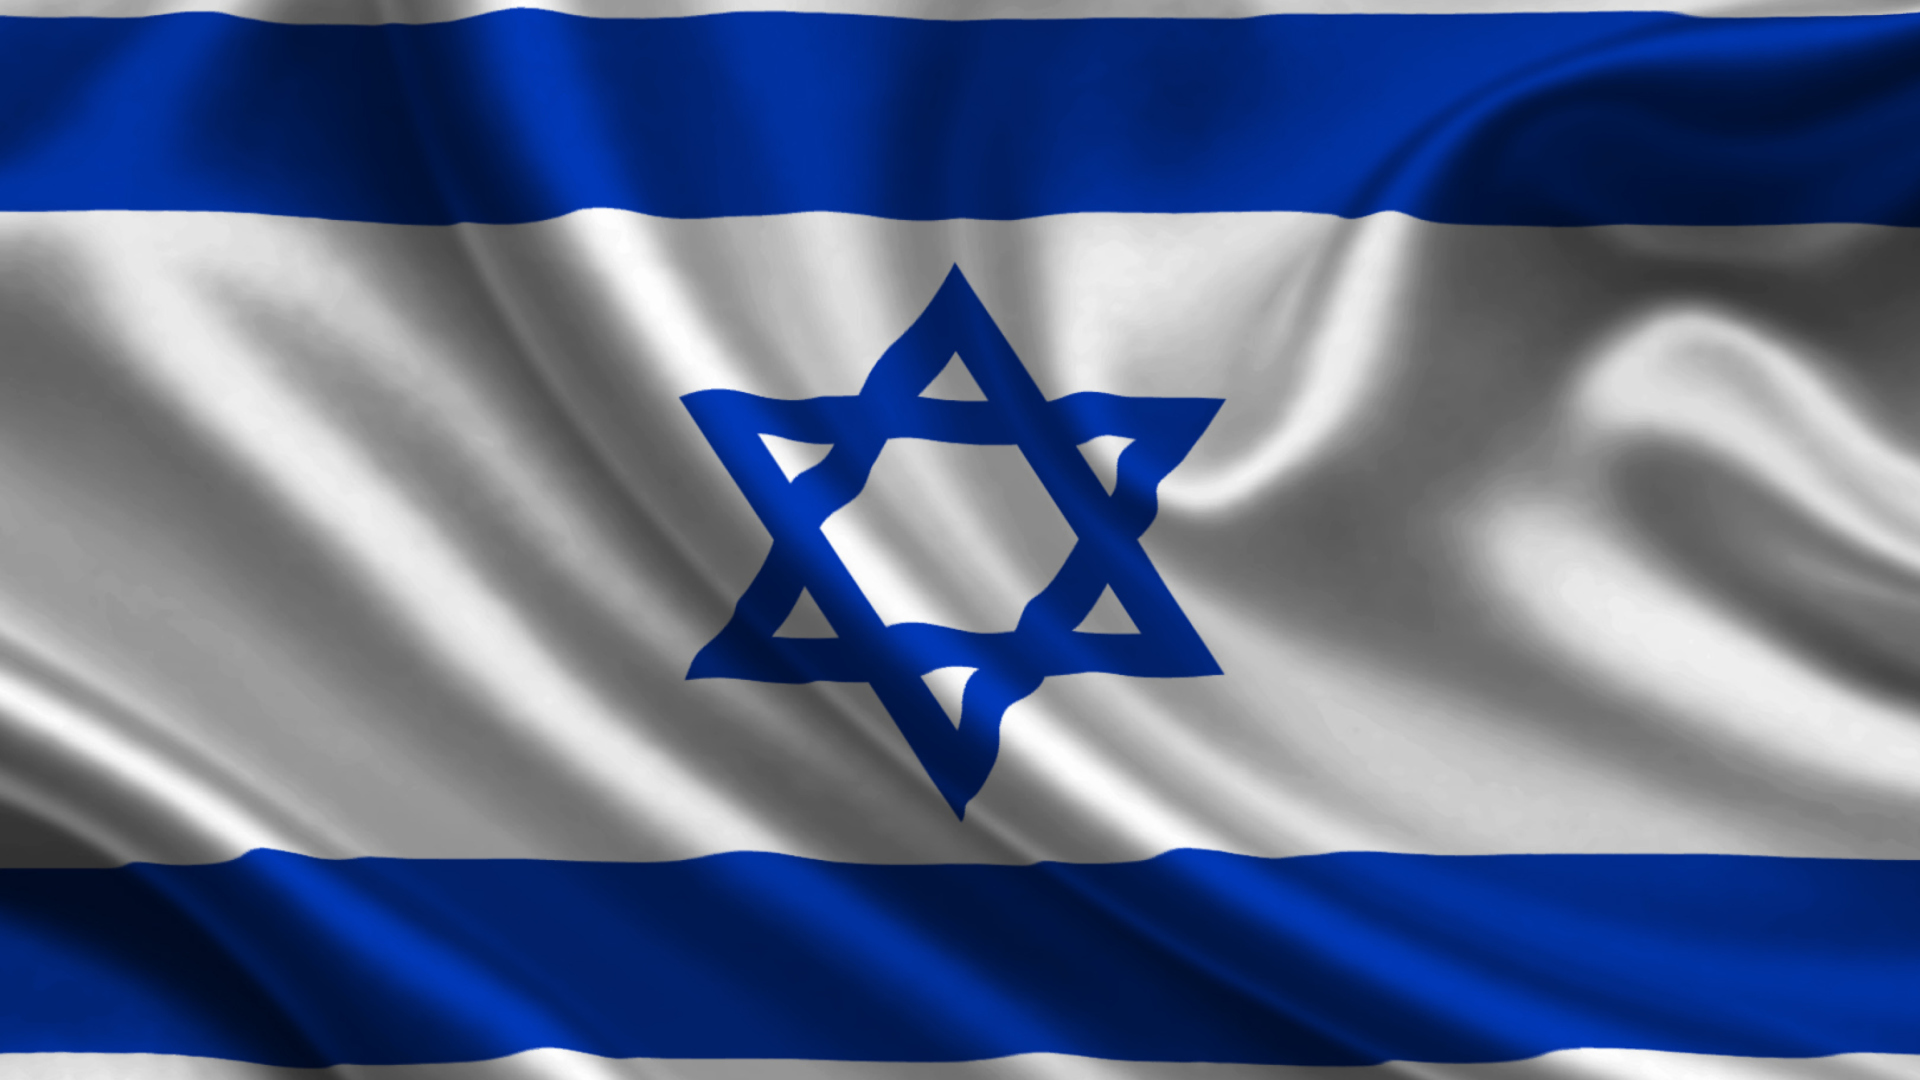 Israel Flag wallpaper 1920x1080